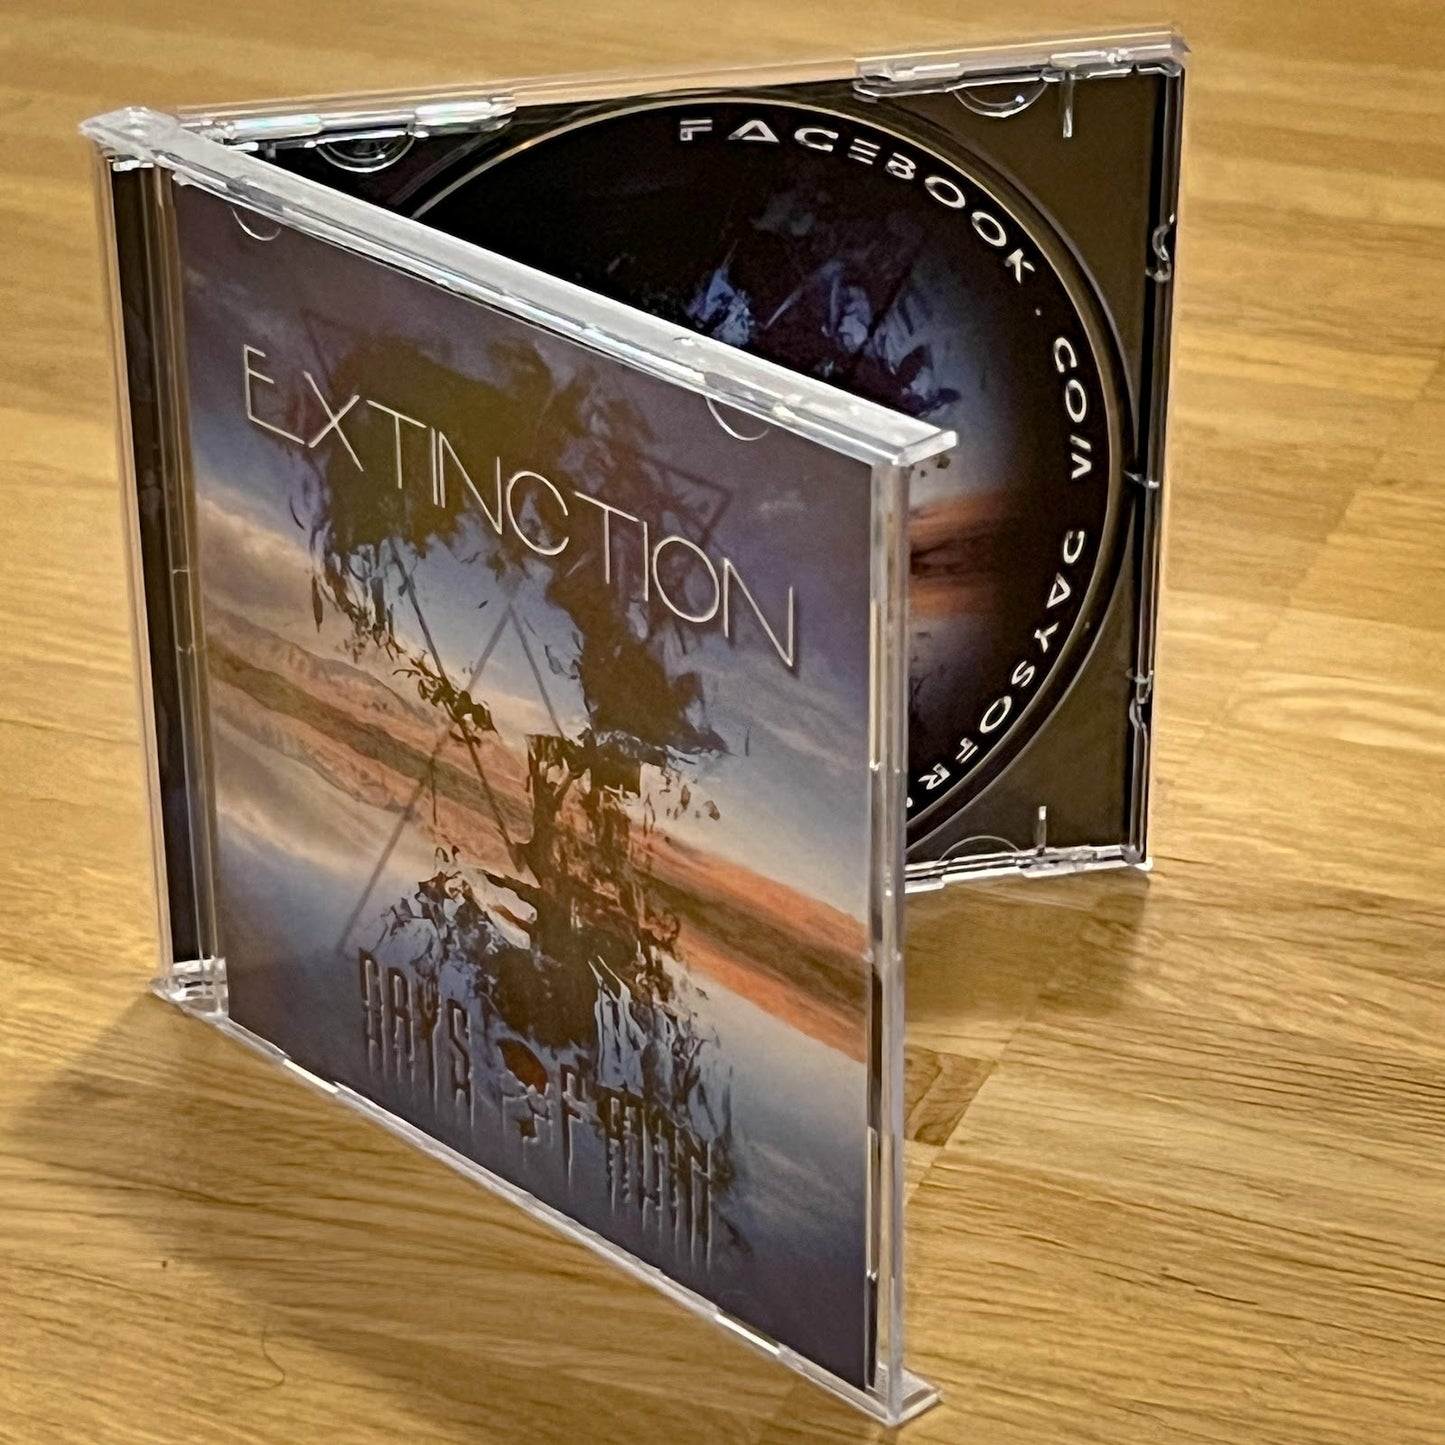 CD "Extinction"